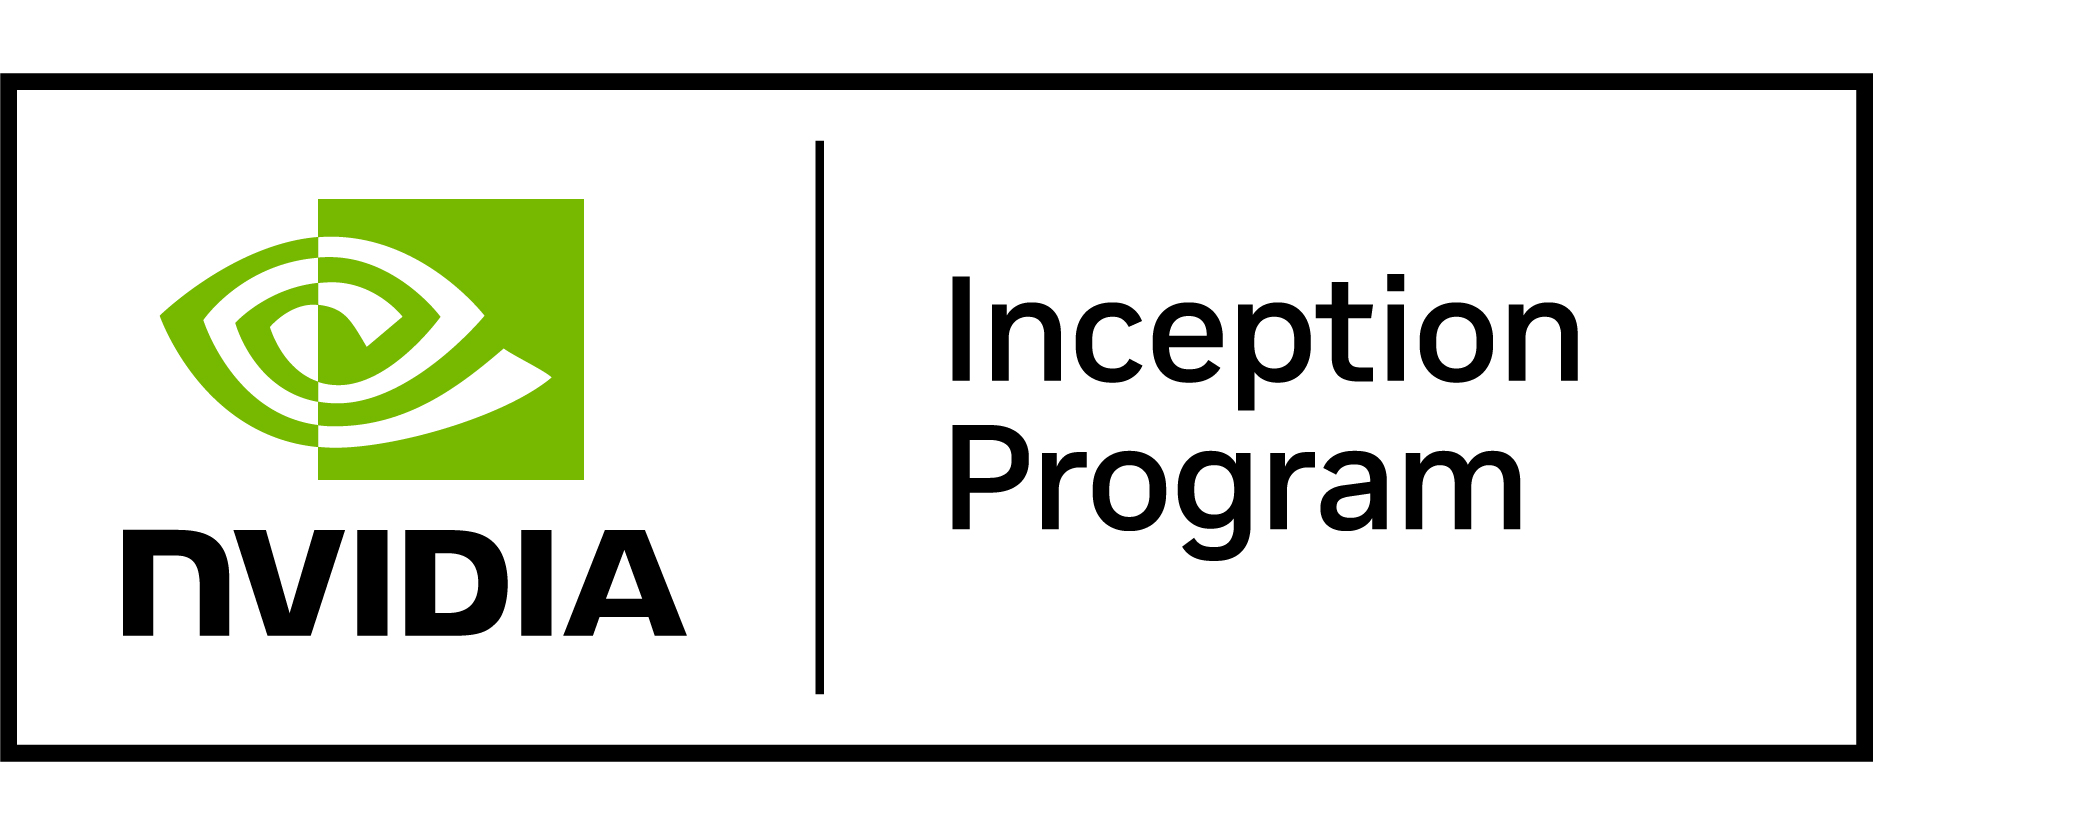 nv inception program badge 02 community tier About Artiquare